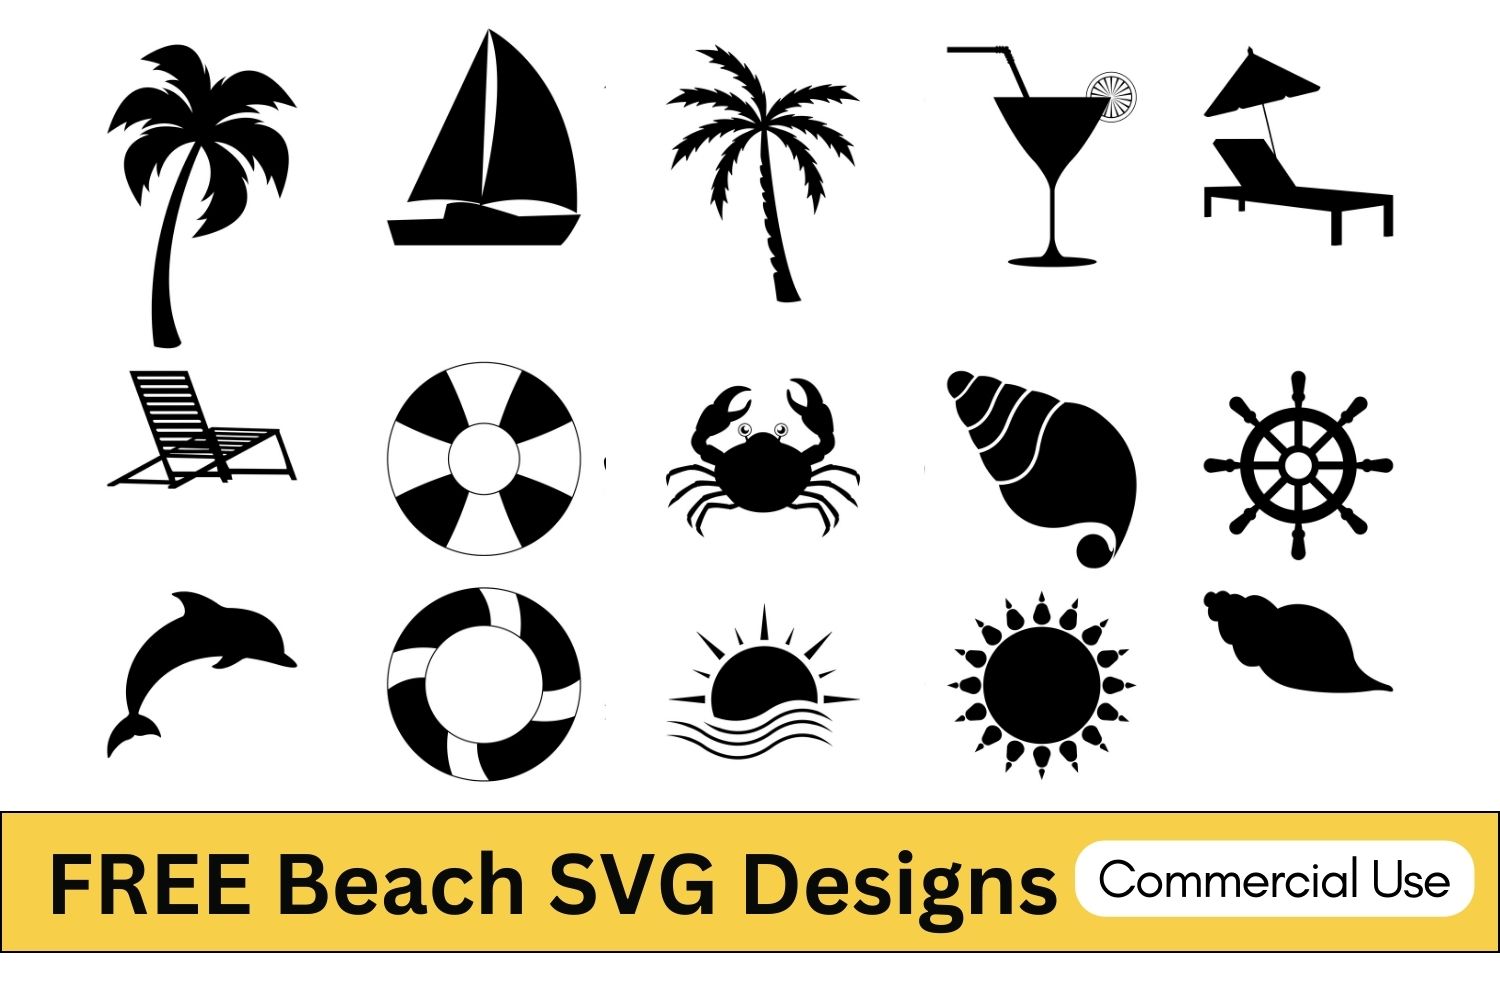 Beach, Holday, Celebration, Enjoy, Refresh, SVG, Cricut, download, svg clipart designs